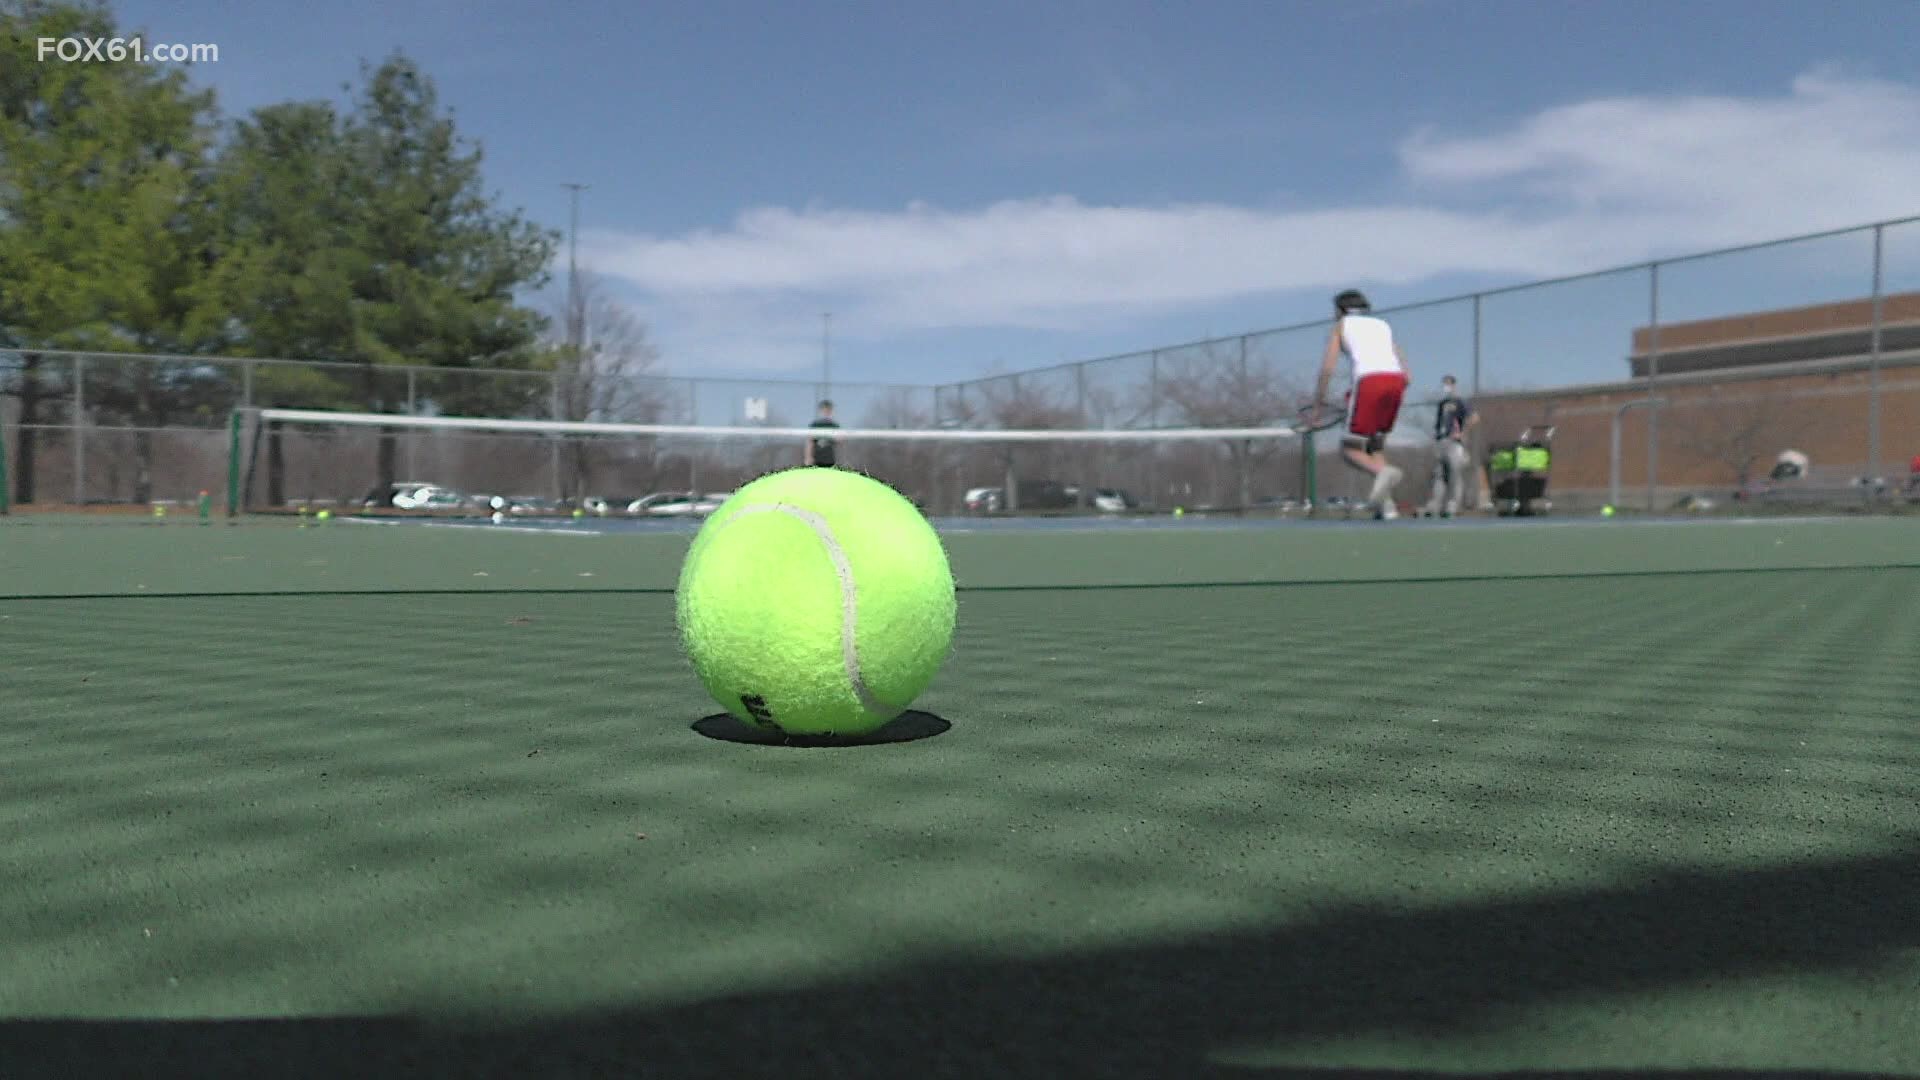 The tennis teams in East Haven hold practice as their season is set to begin.